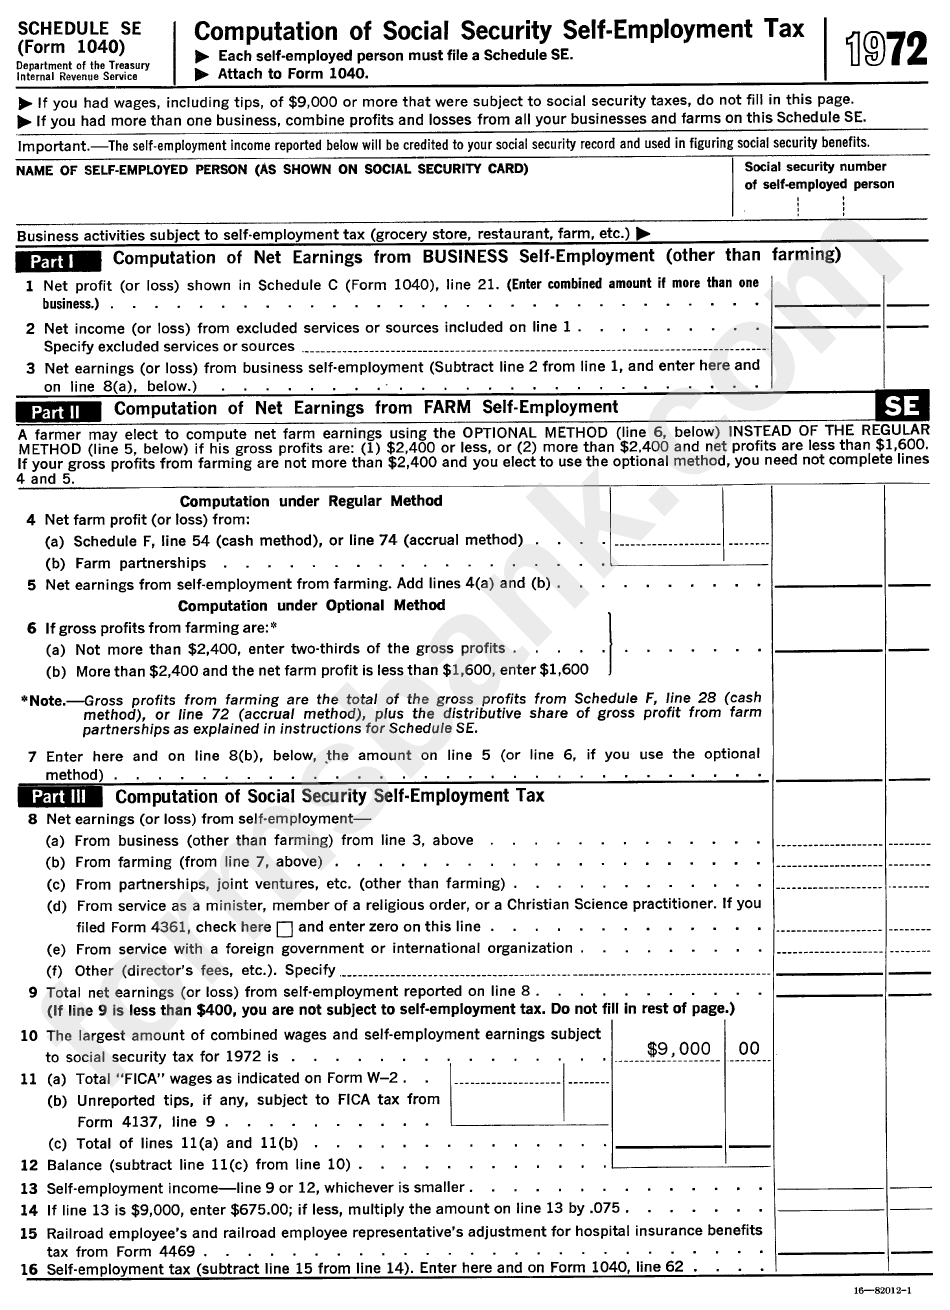 Schedule Se (Form 1040) Computation Of Social Security Self